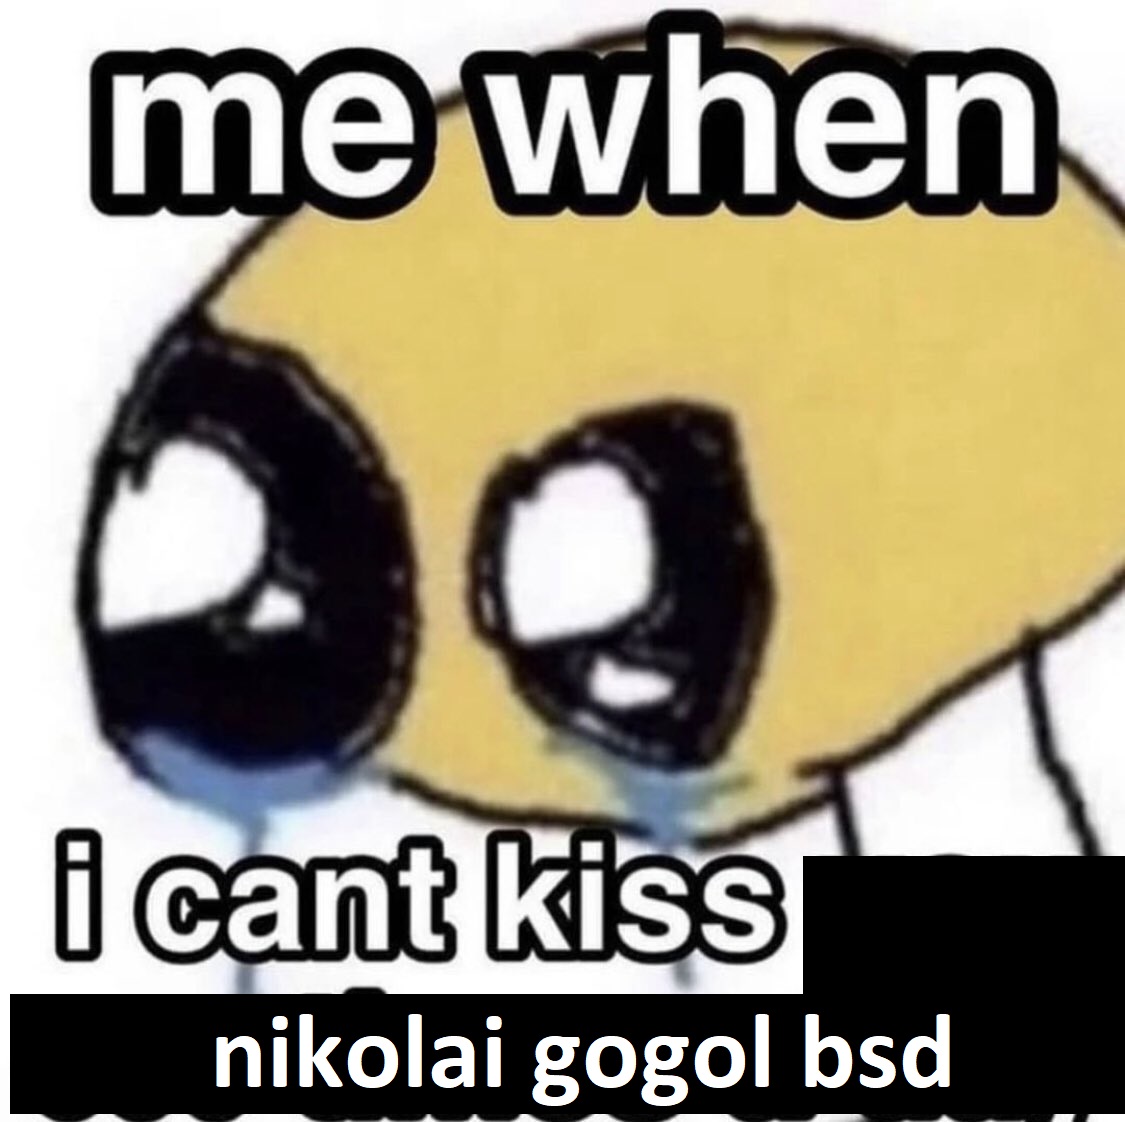 good morning ppl i wanna kiss nikolai gogol bsd :((((